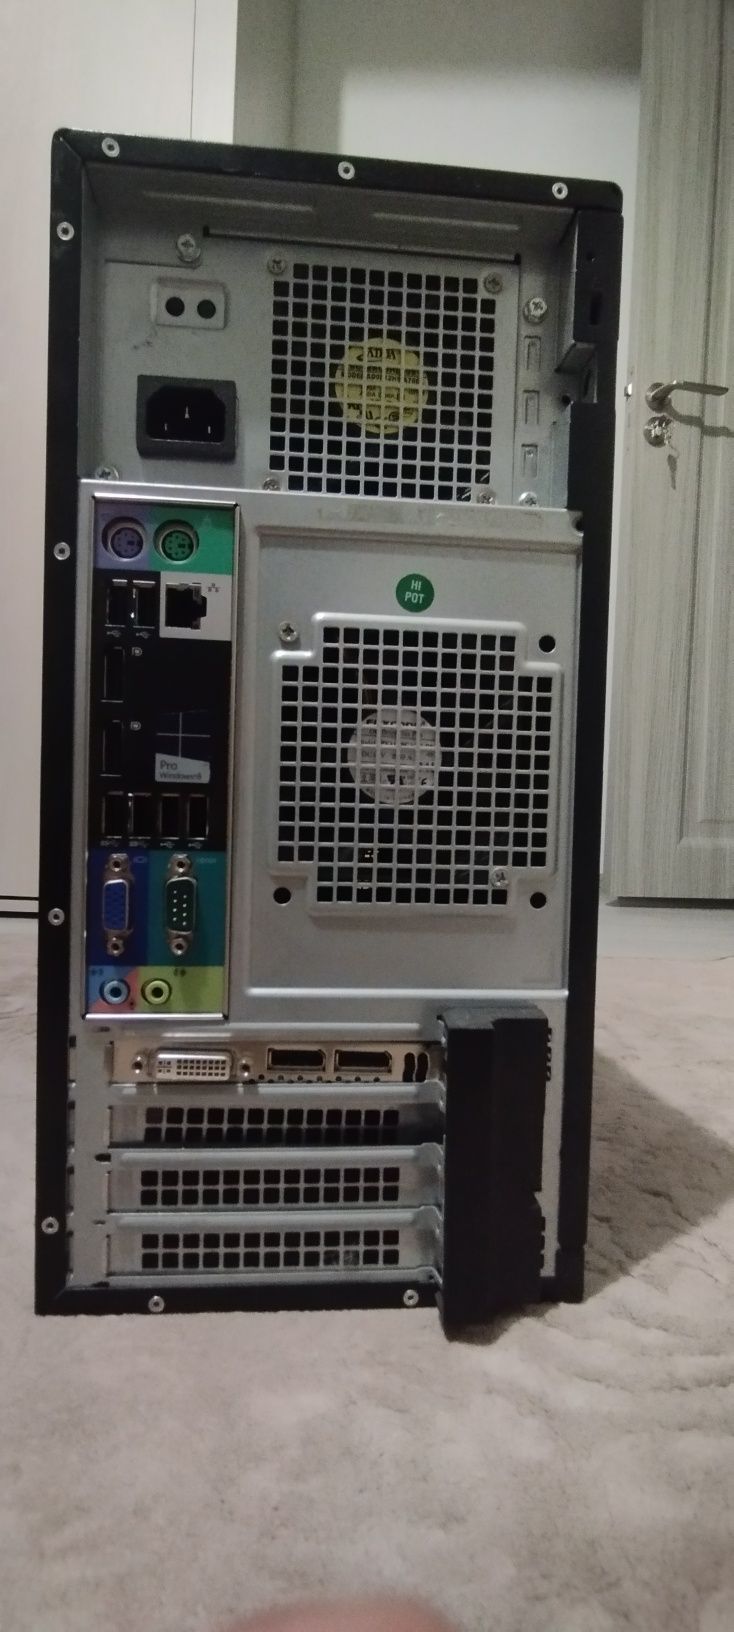 PC Dell Optiplex 7010 Tower (Workstation)